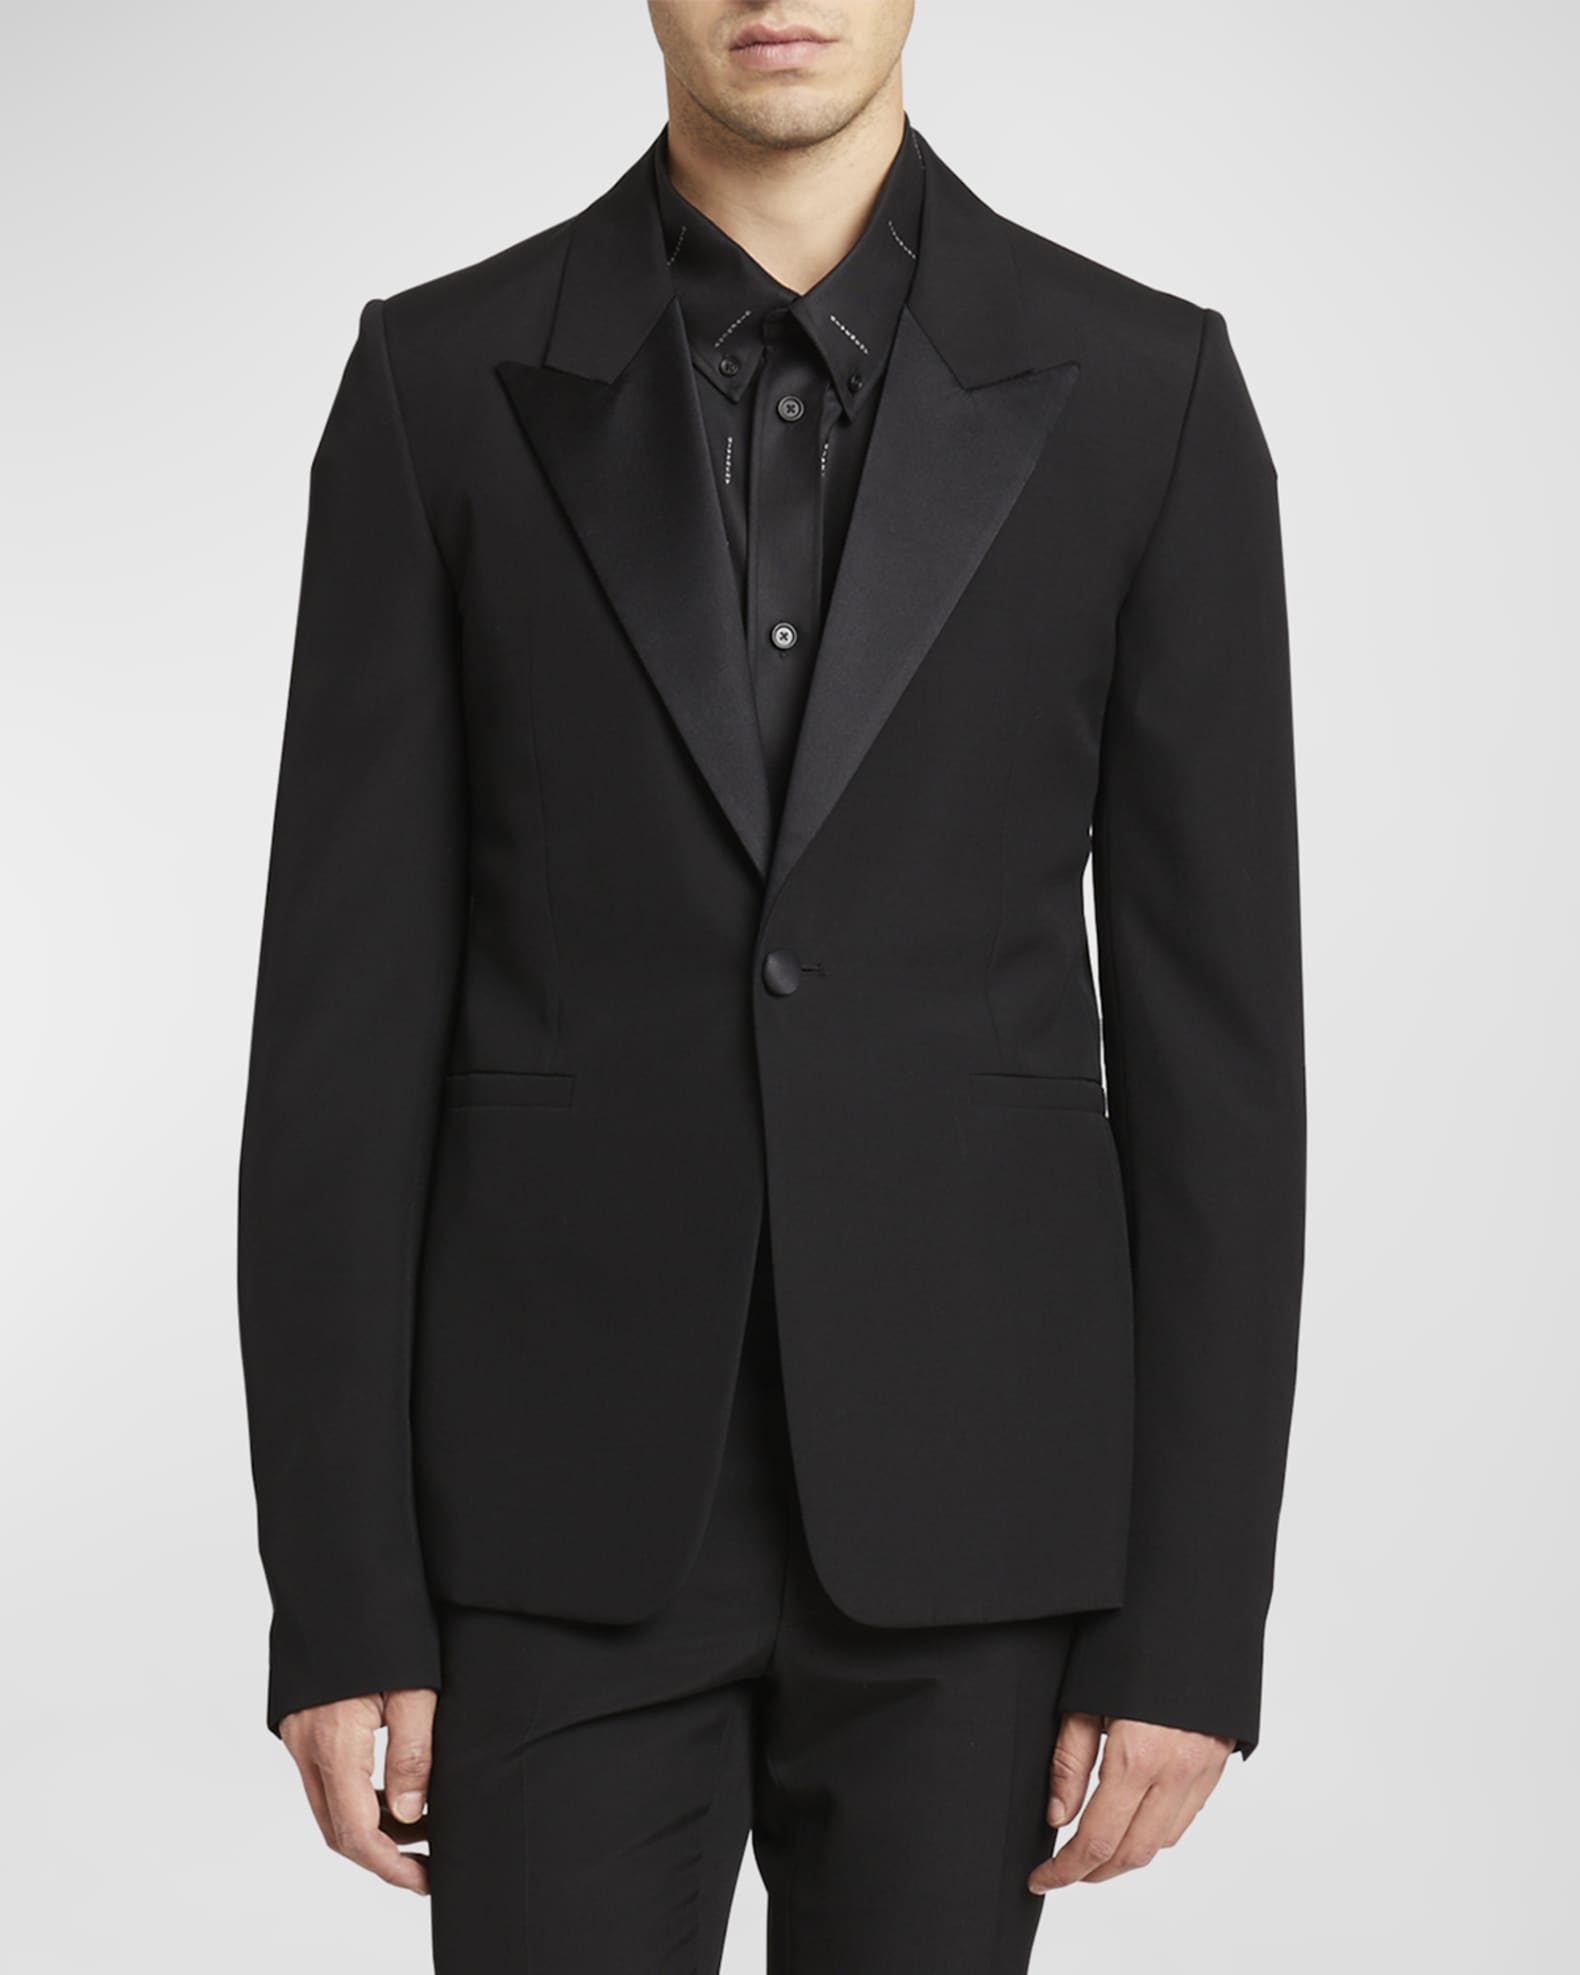 Givenchy Men's Slim Peak-Lapel Tuxedo Jacket | Neiman Marcus